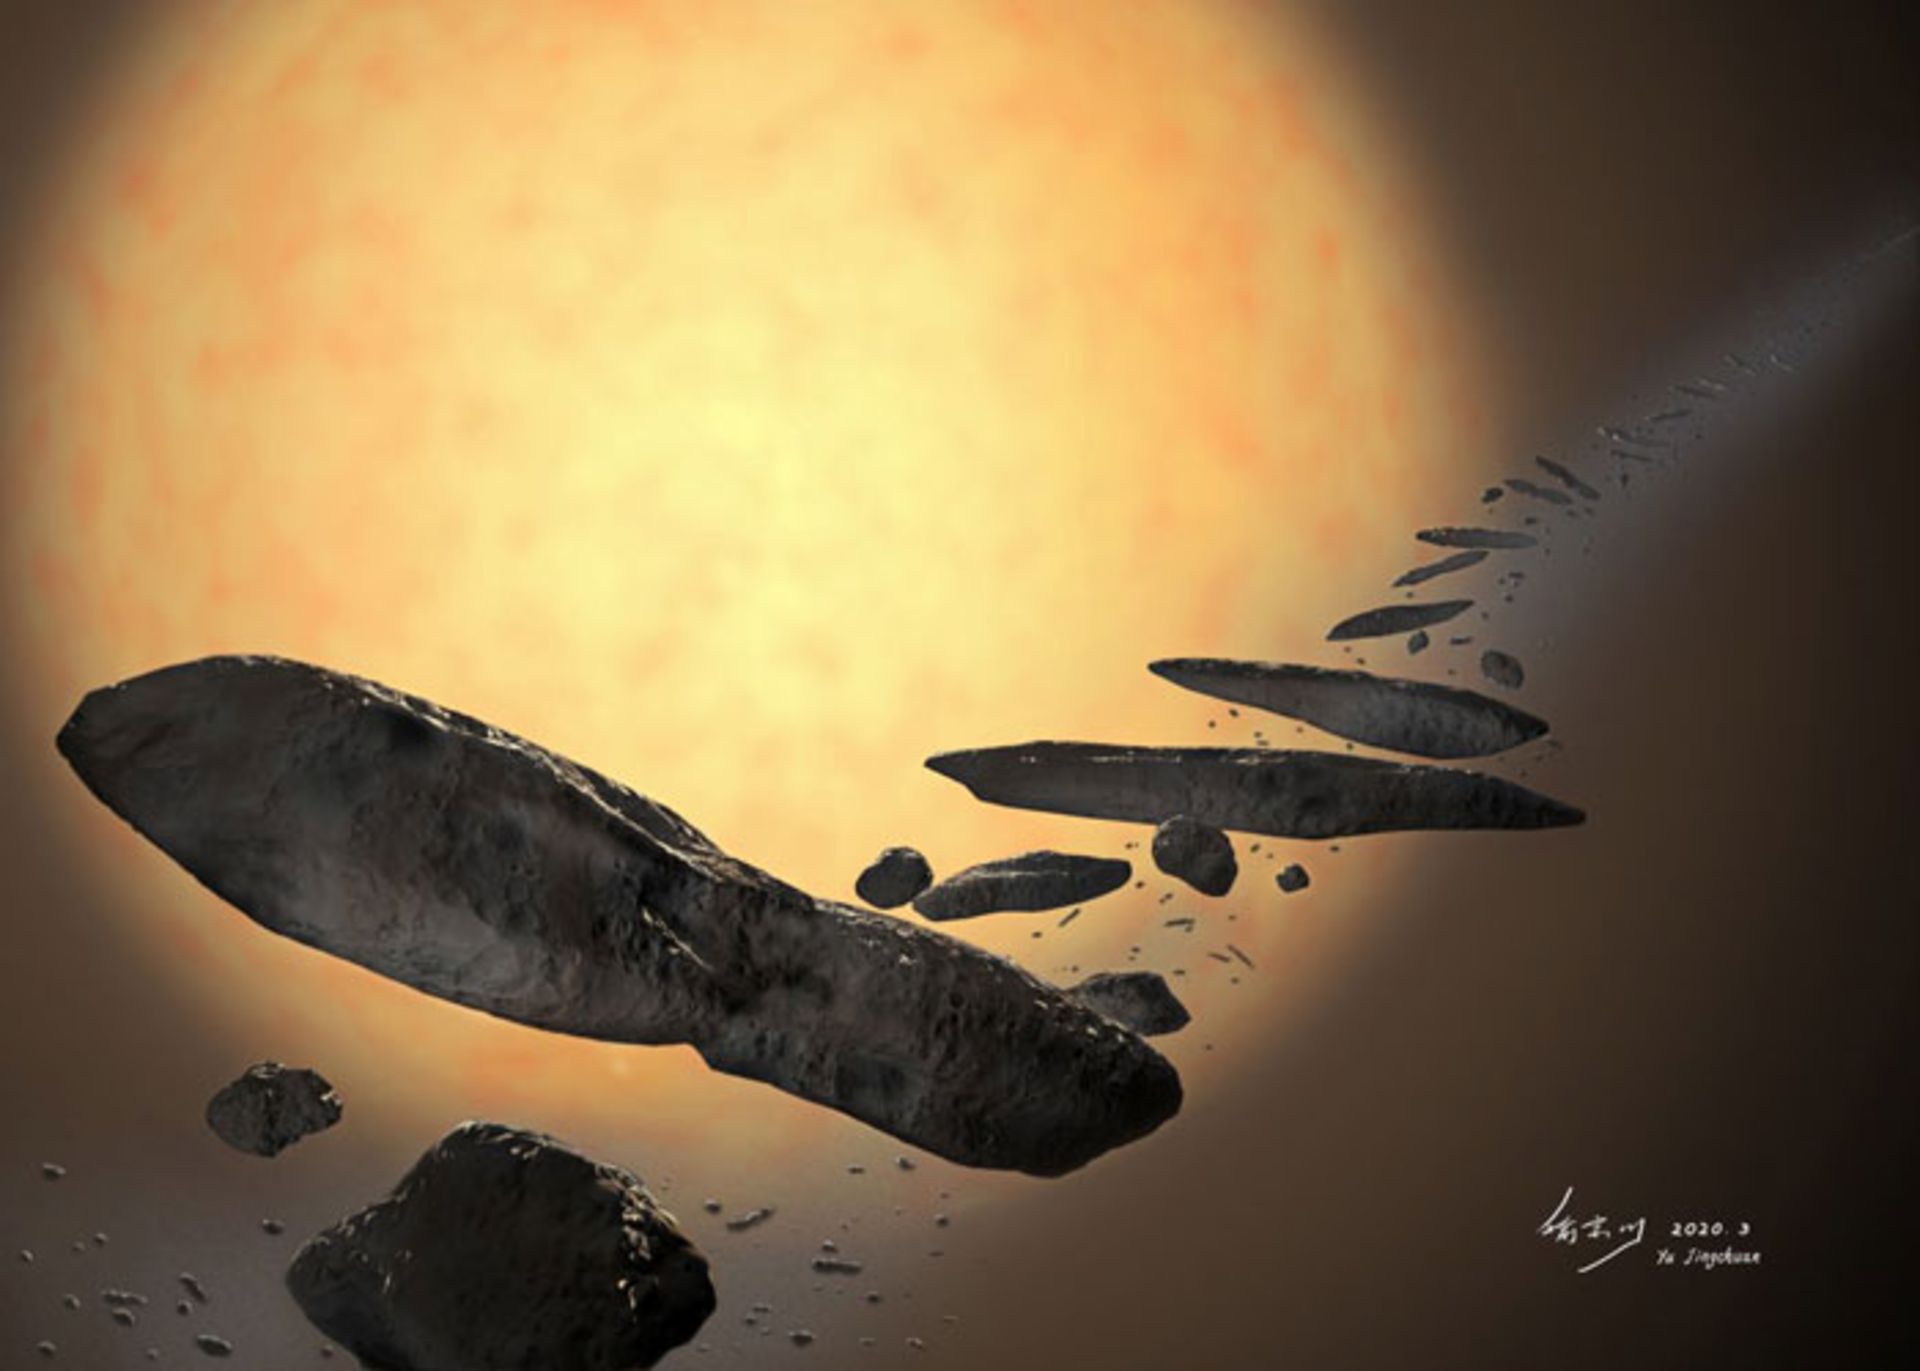 مرجع متخصصين ايران امواموا /Oumuamua